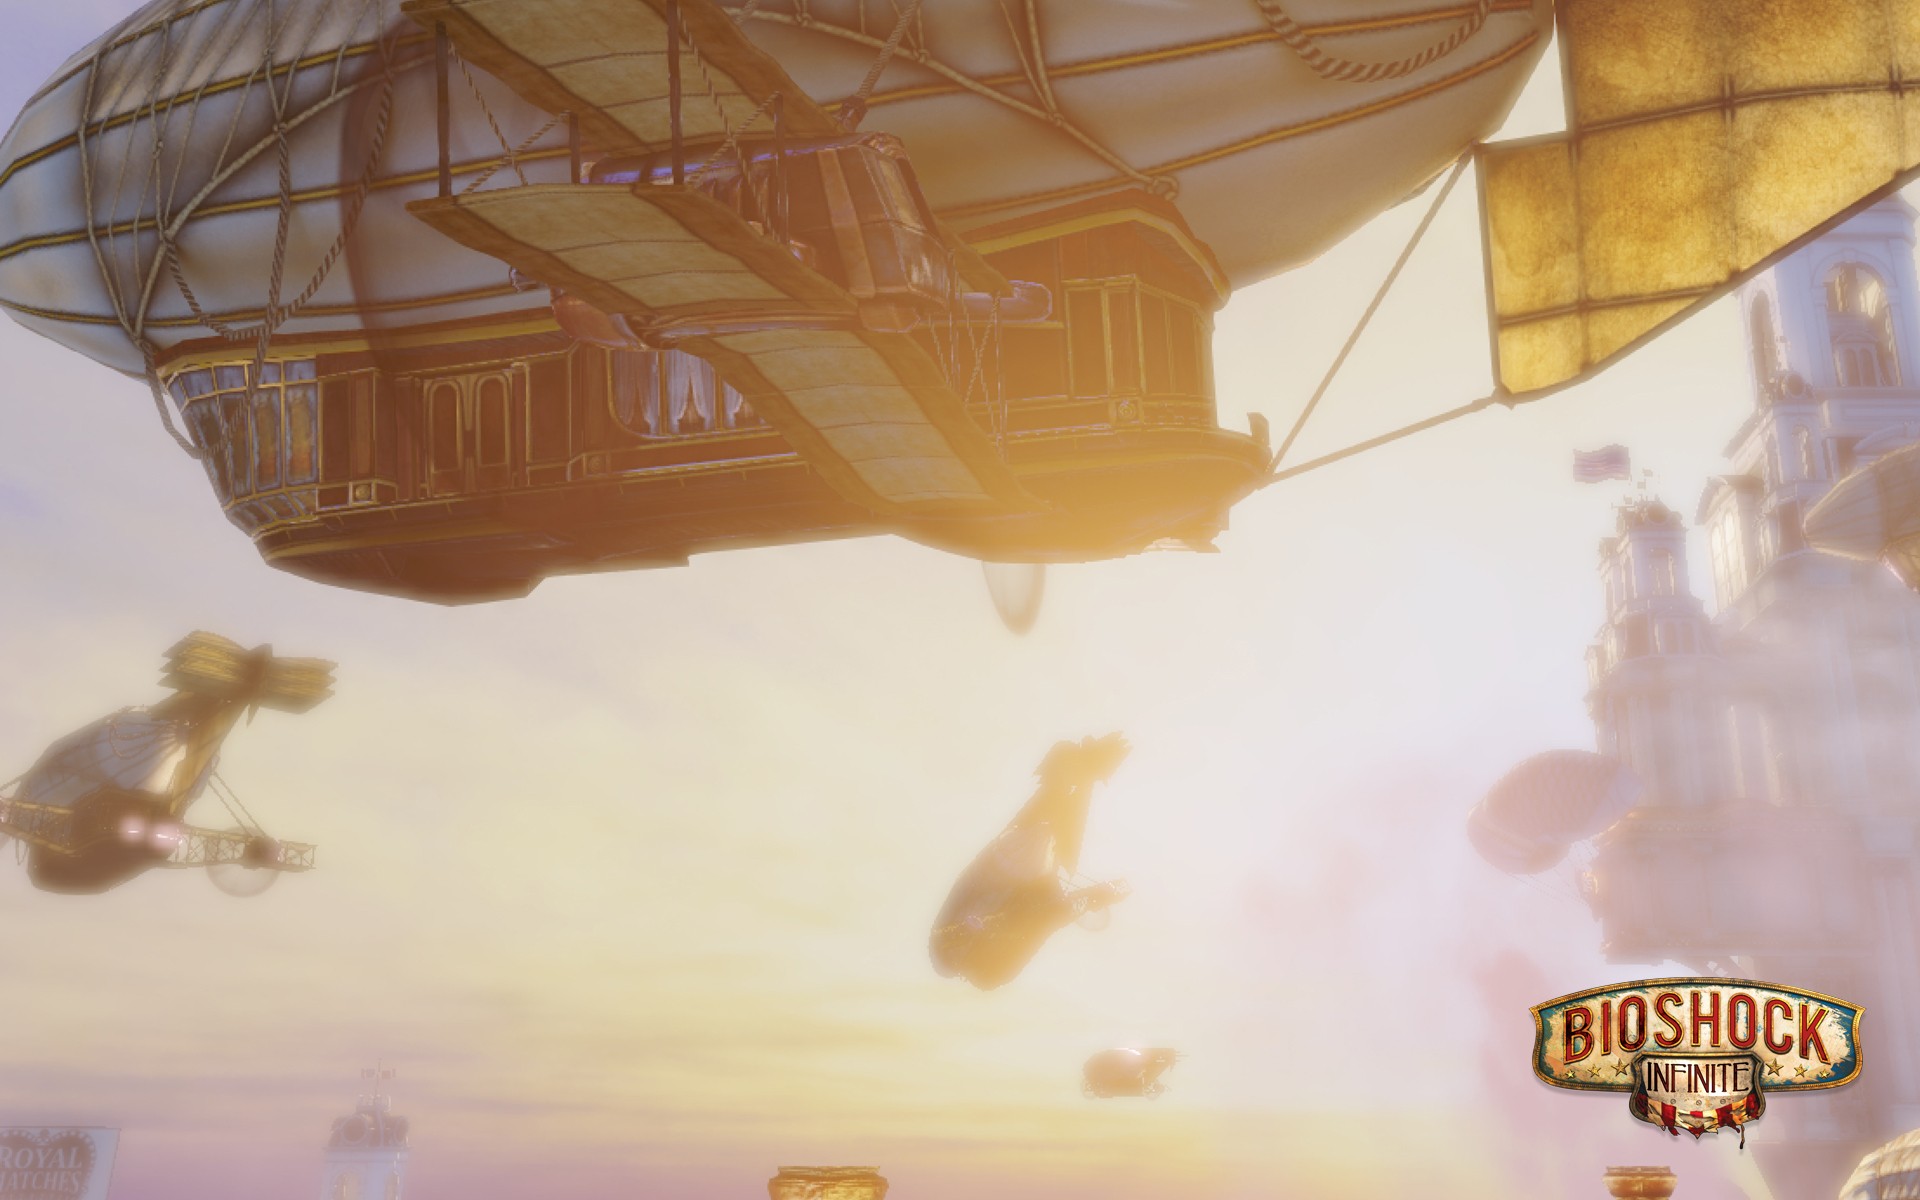 General 1920x1200 BioShock Infinite video games airships vehicle 2K Games Irrational Games